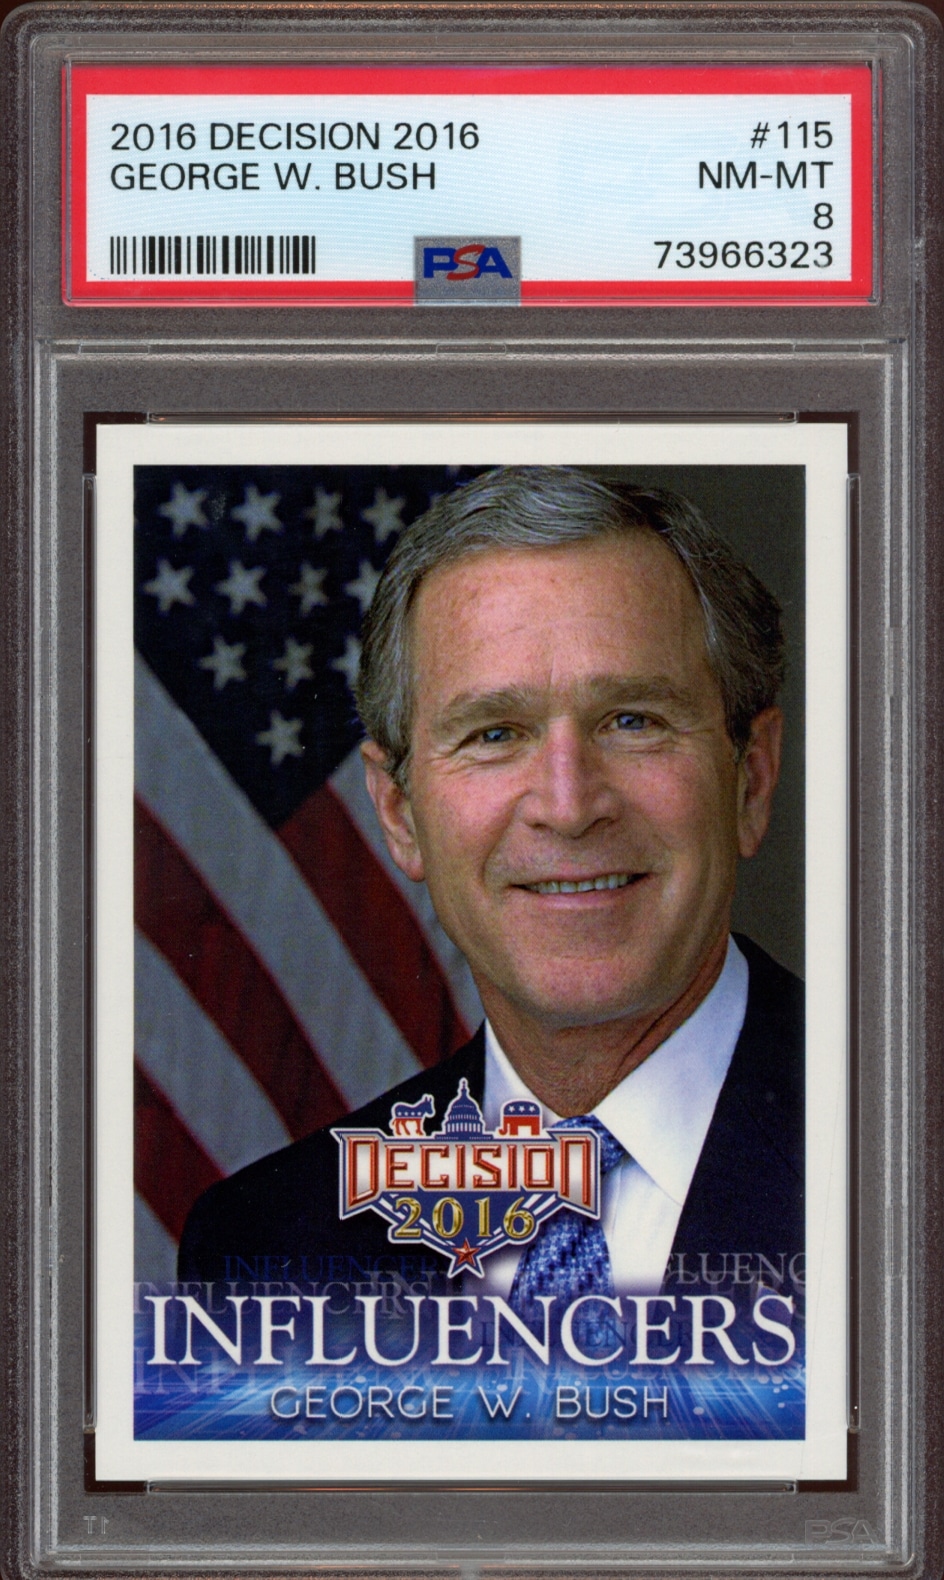 PSA 8 graded 2016 Leaf Decision card featuring George W. Bush.